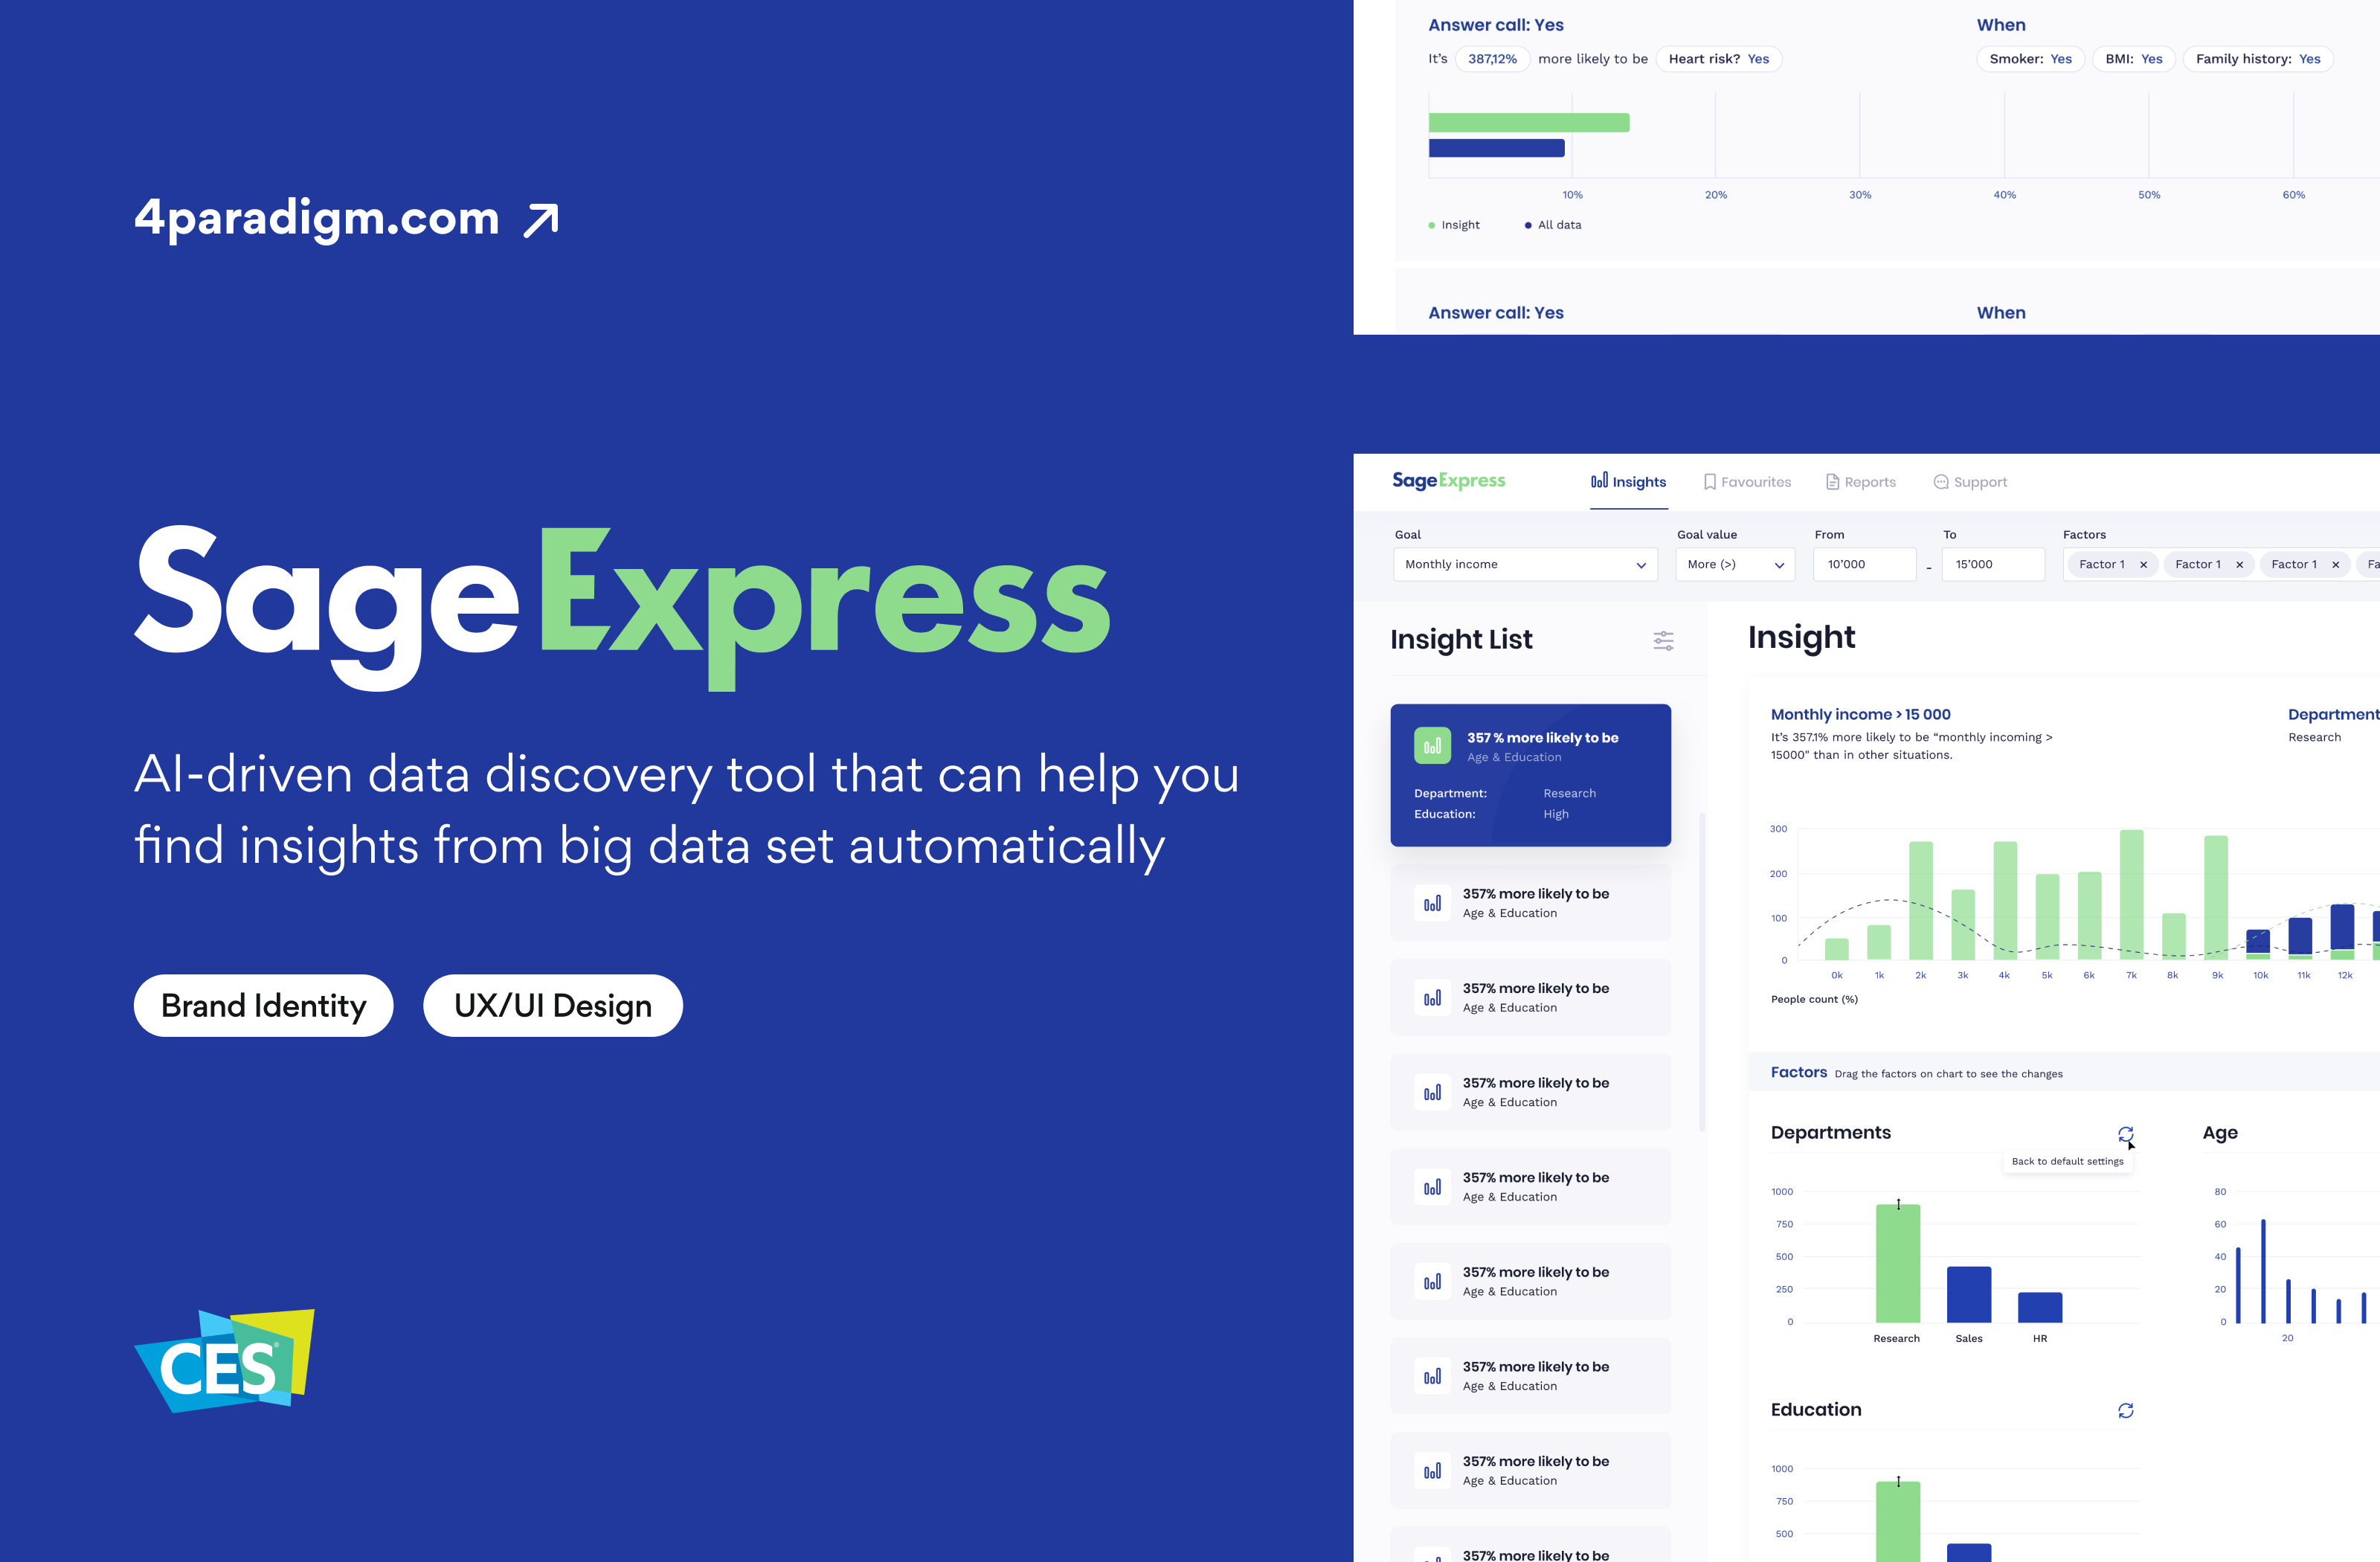 SageExpress | Brand identity & UX/UI Design